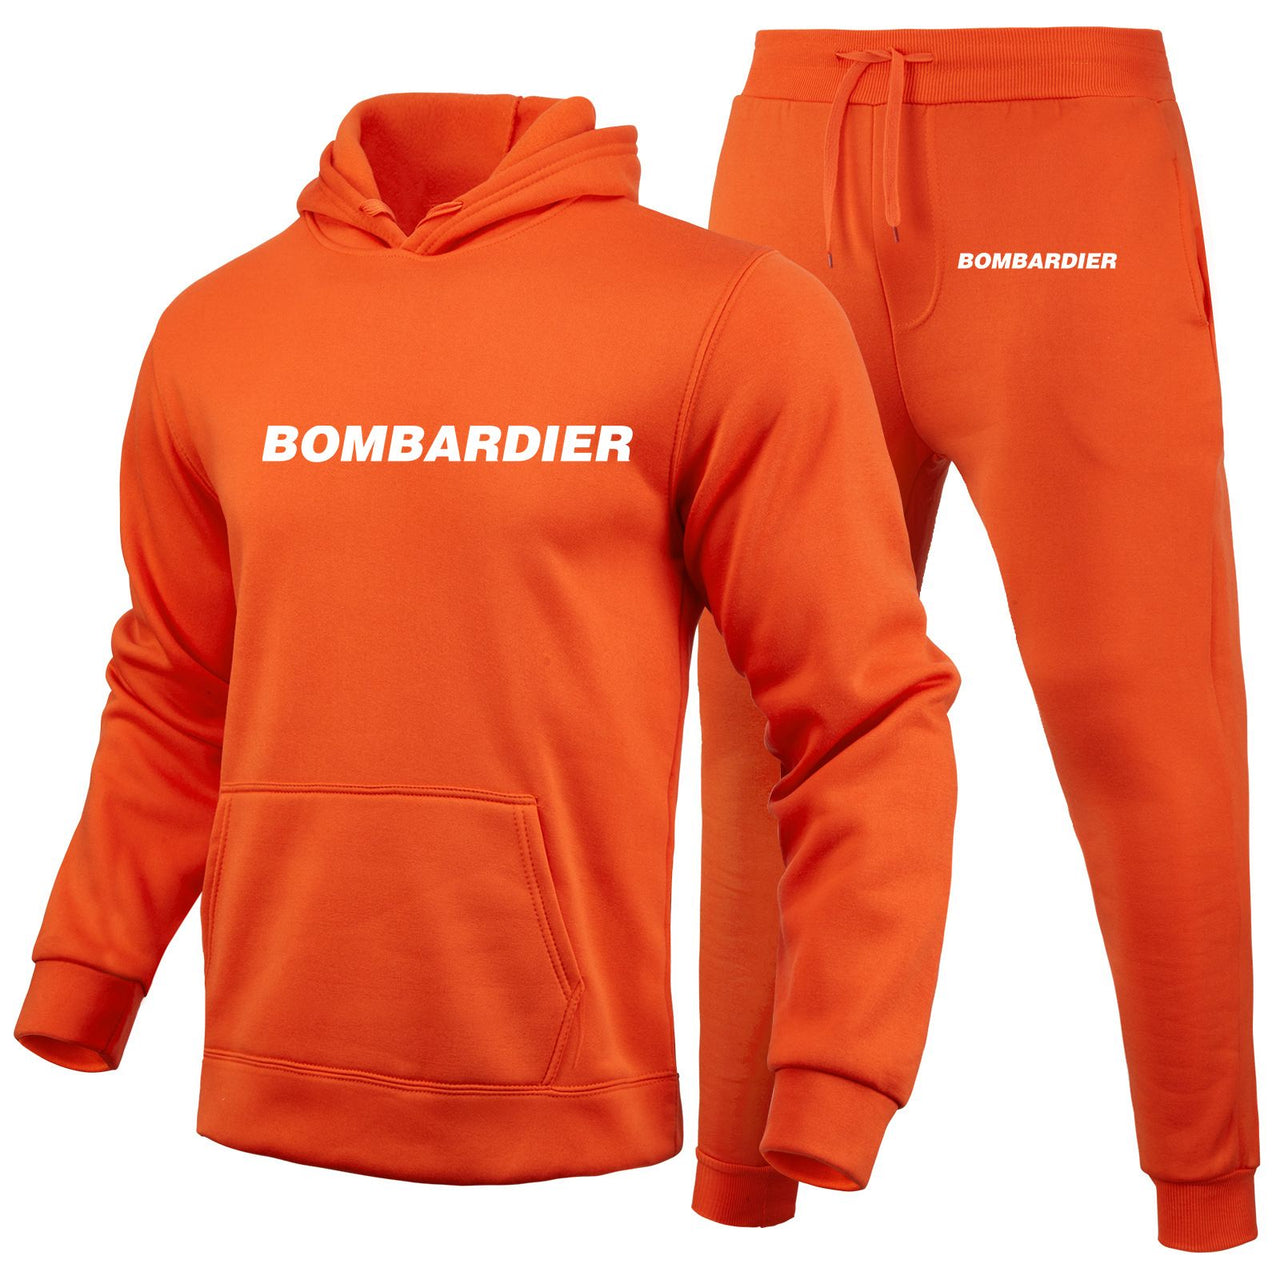 Bombardier & Text Designed Hoodies & Sweatpants Set